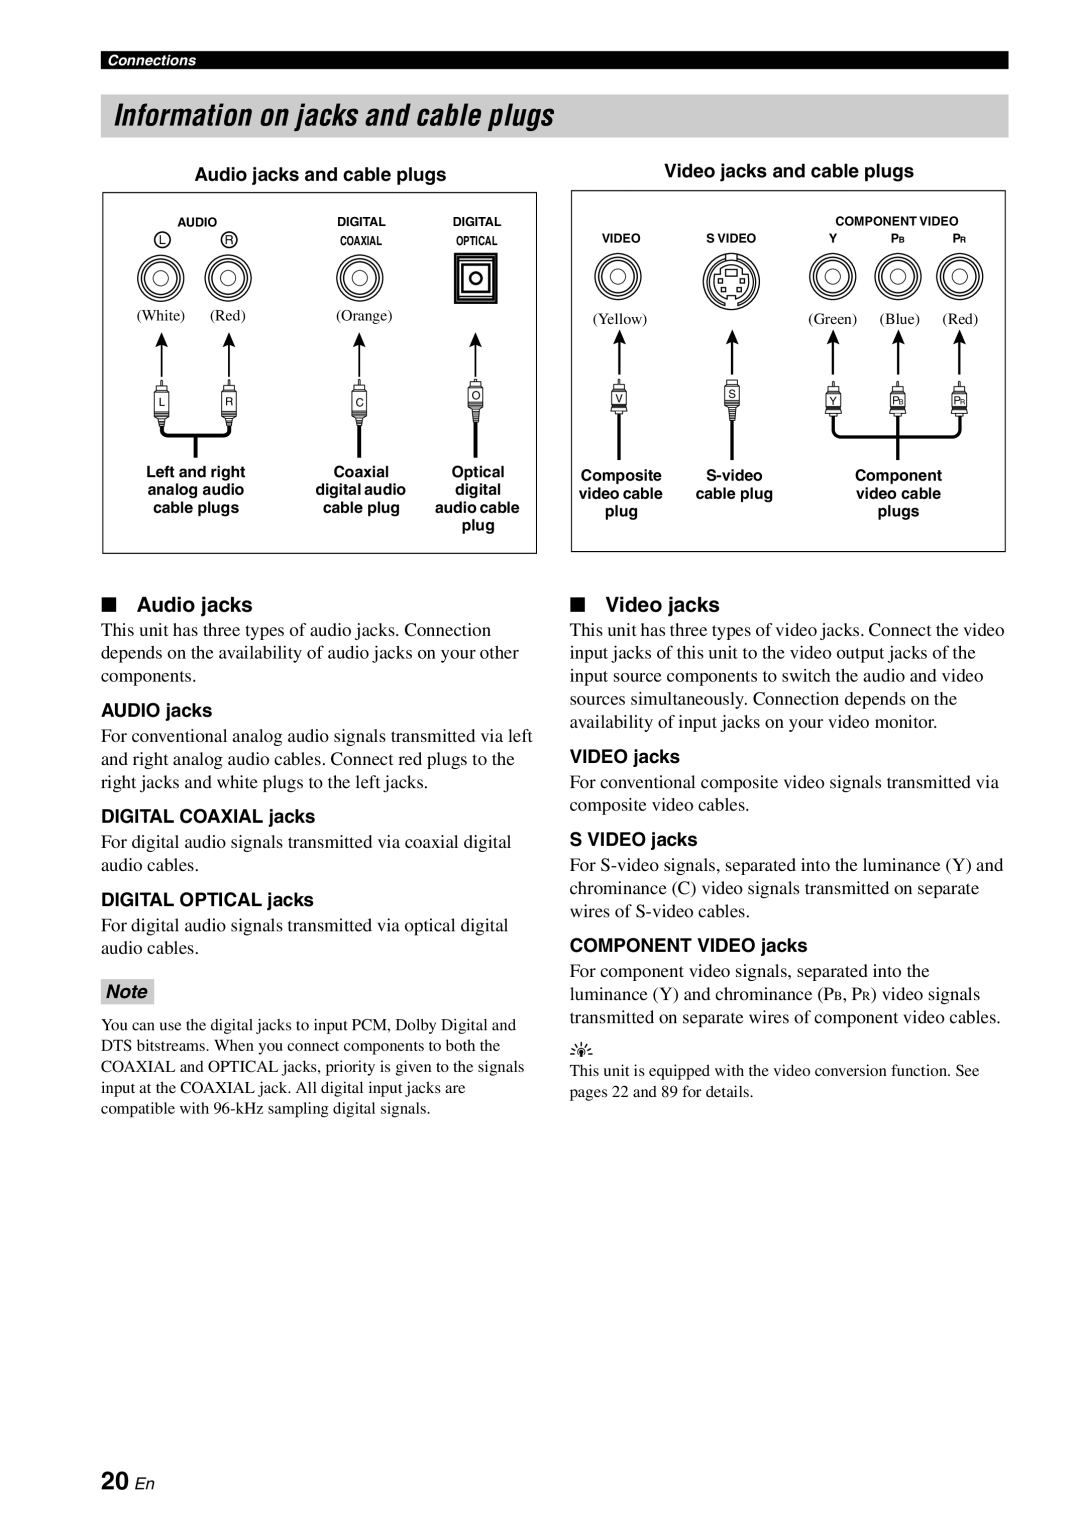 Yamaha RX-V3800 Information on jacks and cable plugs, 20 En, Video jacks, Audio jacks and cable plugs, AUDIO jacks 